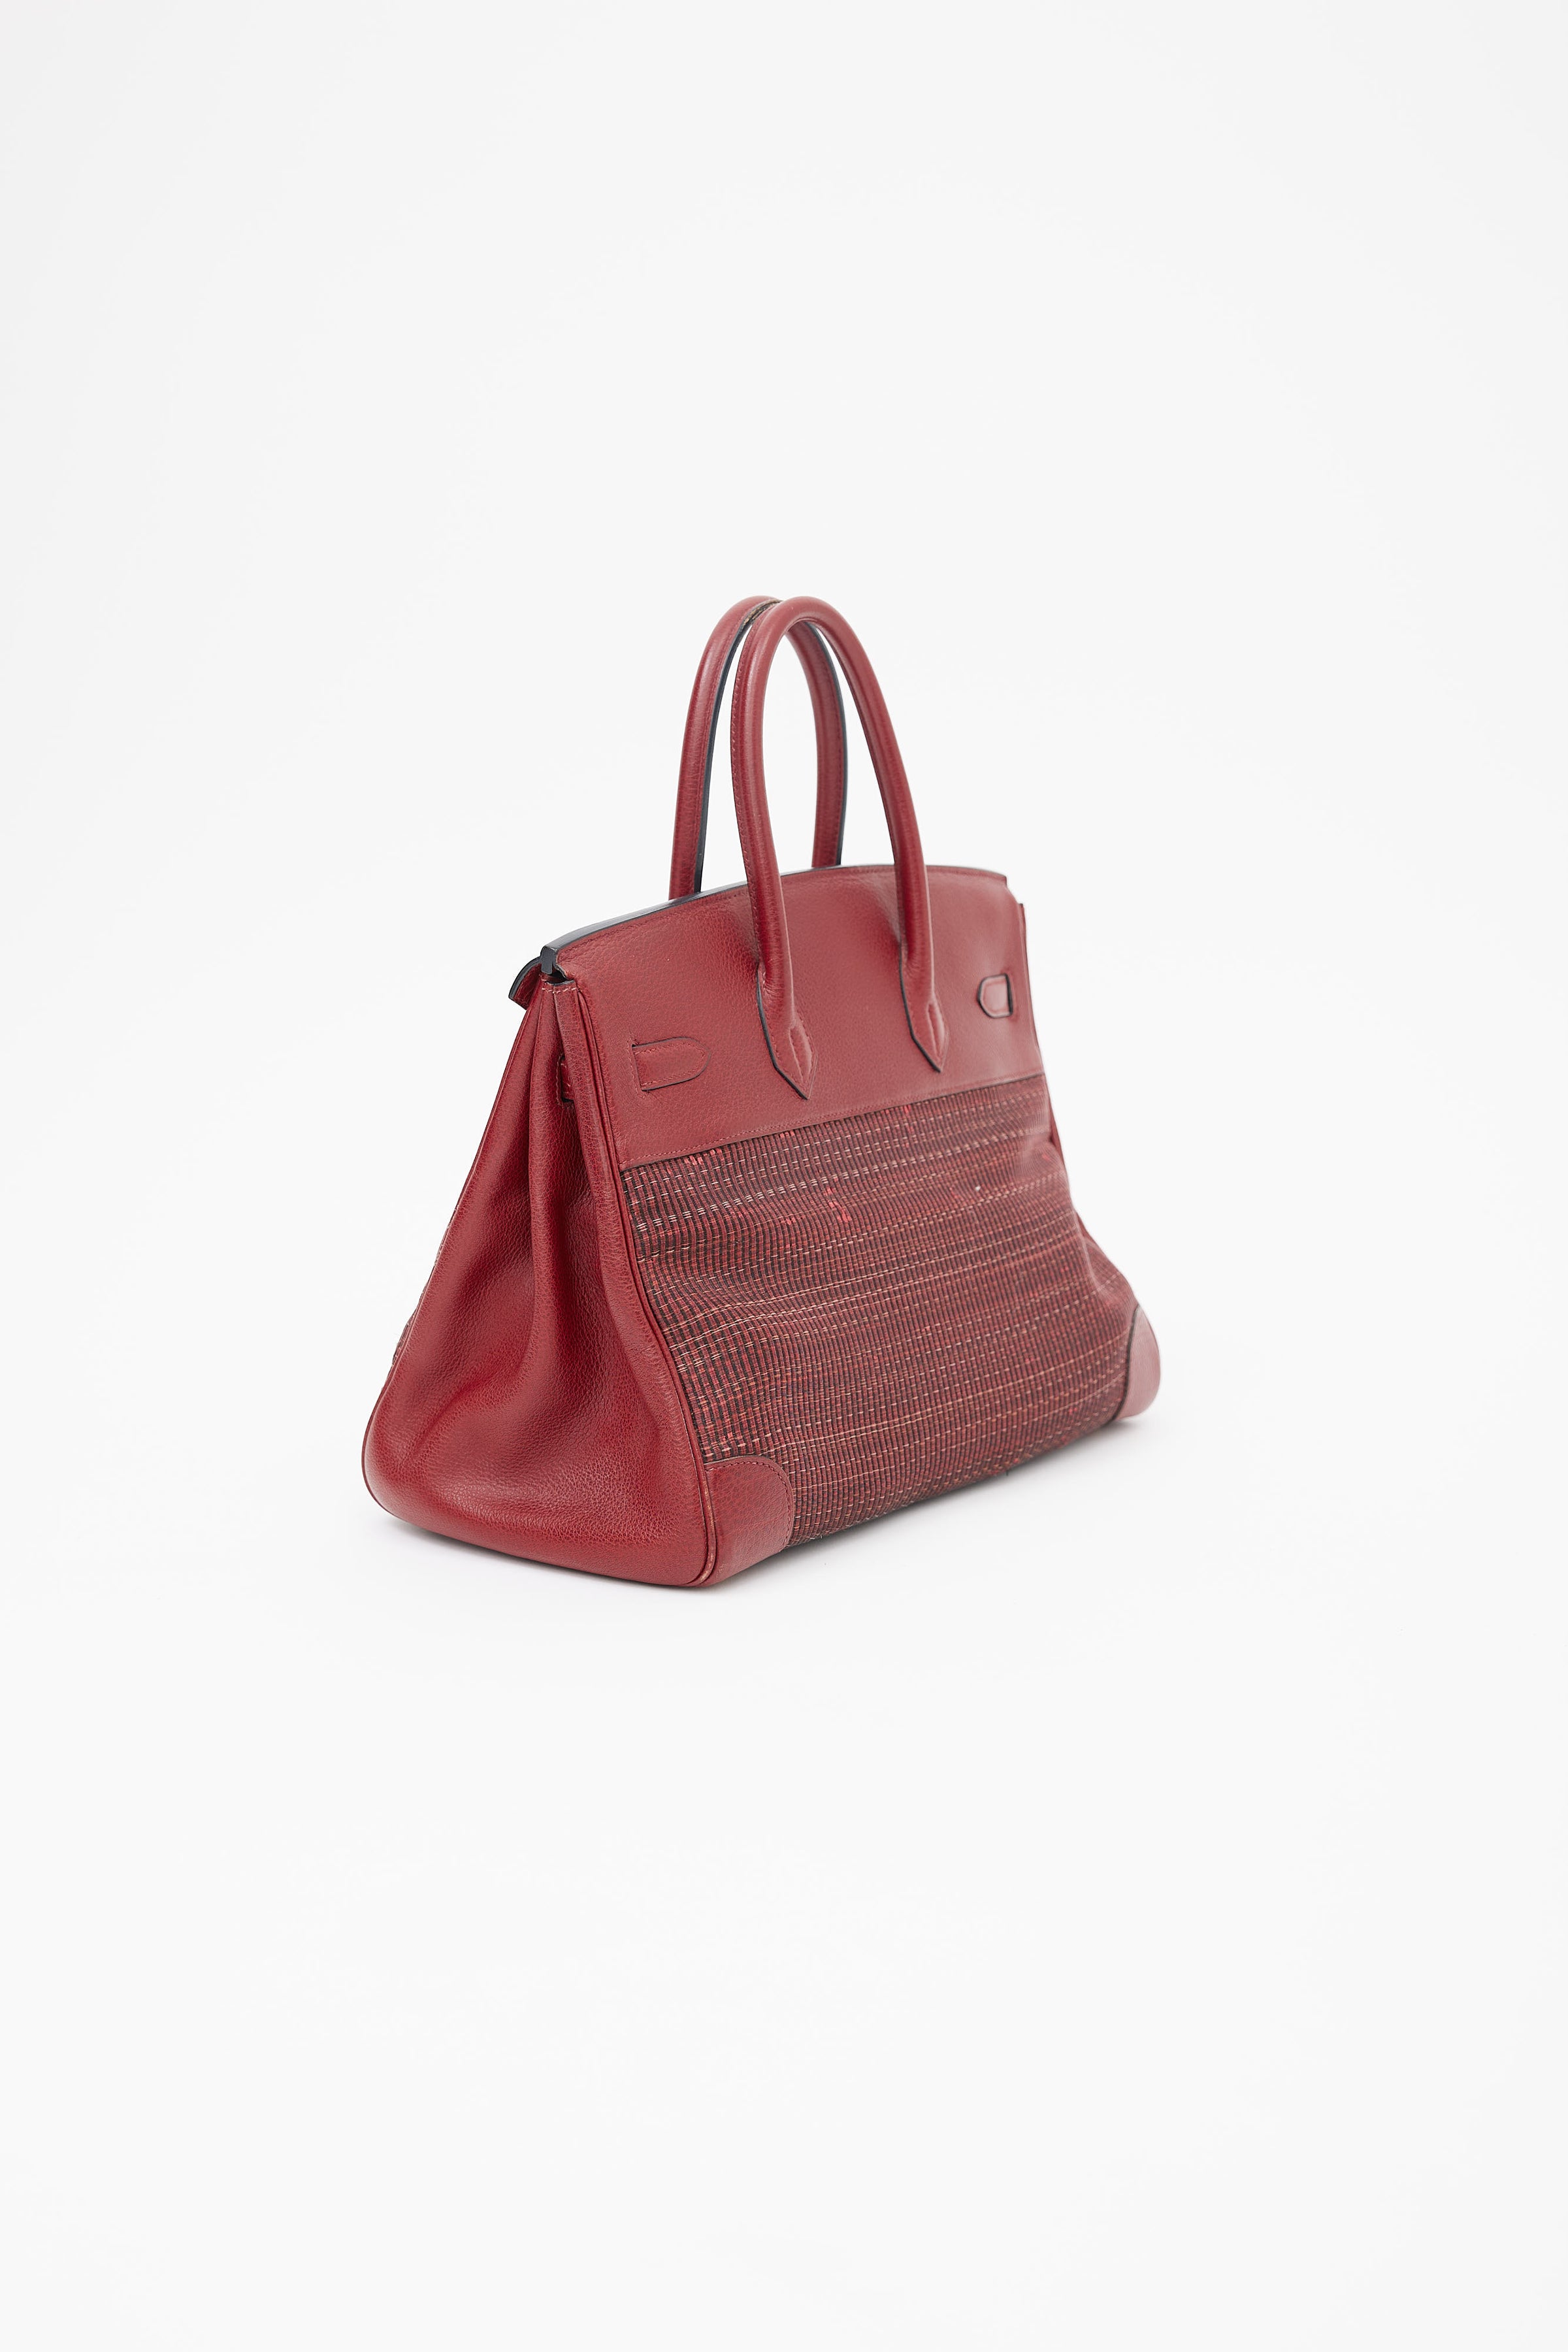 Hermes Clemence Leather Birkin Bag 35 Red